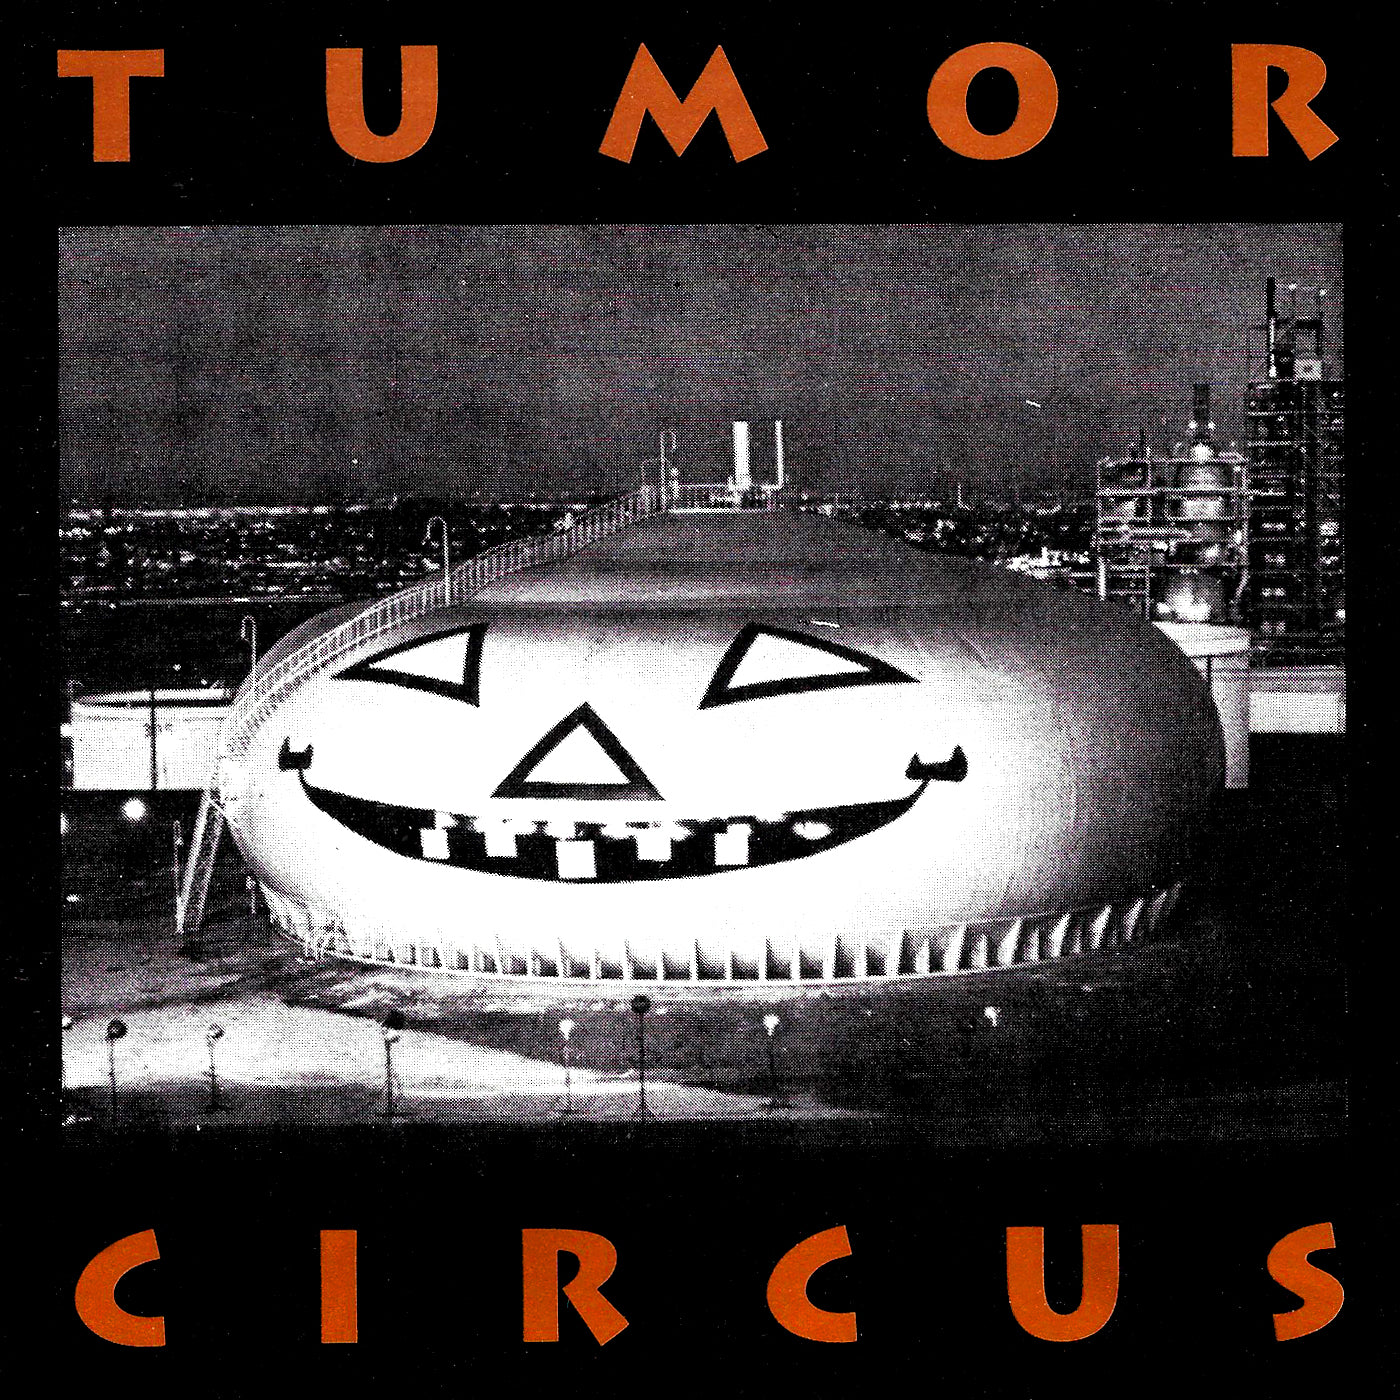 v087 - Tumor Circus - "Tumor Circus"